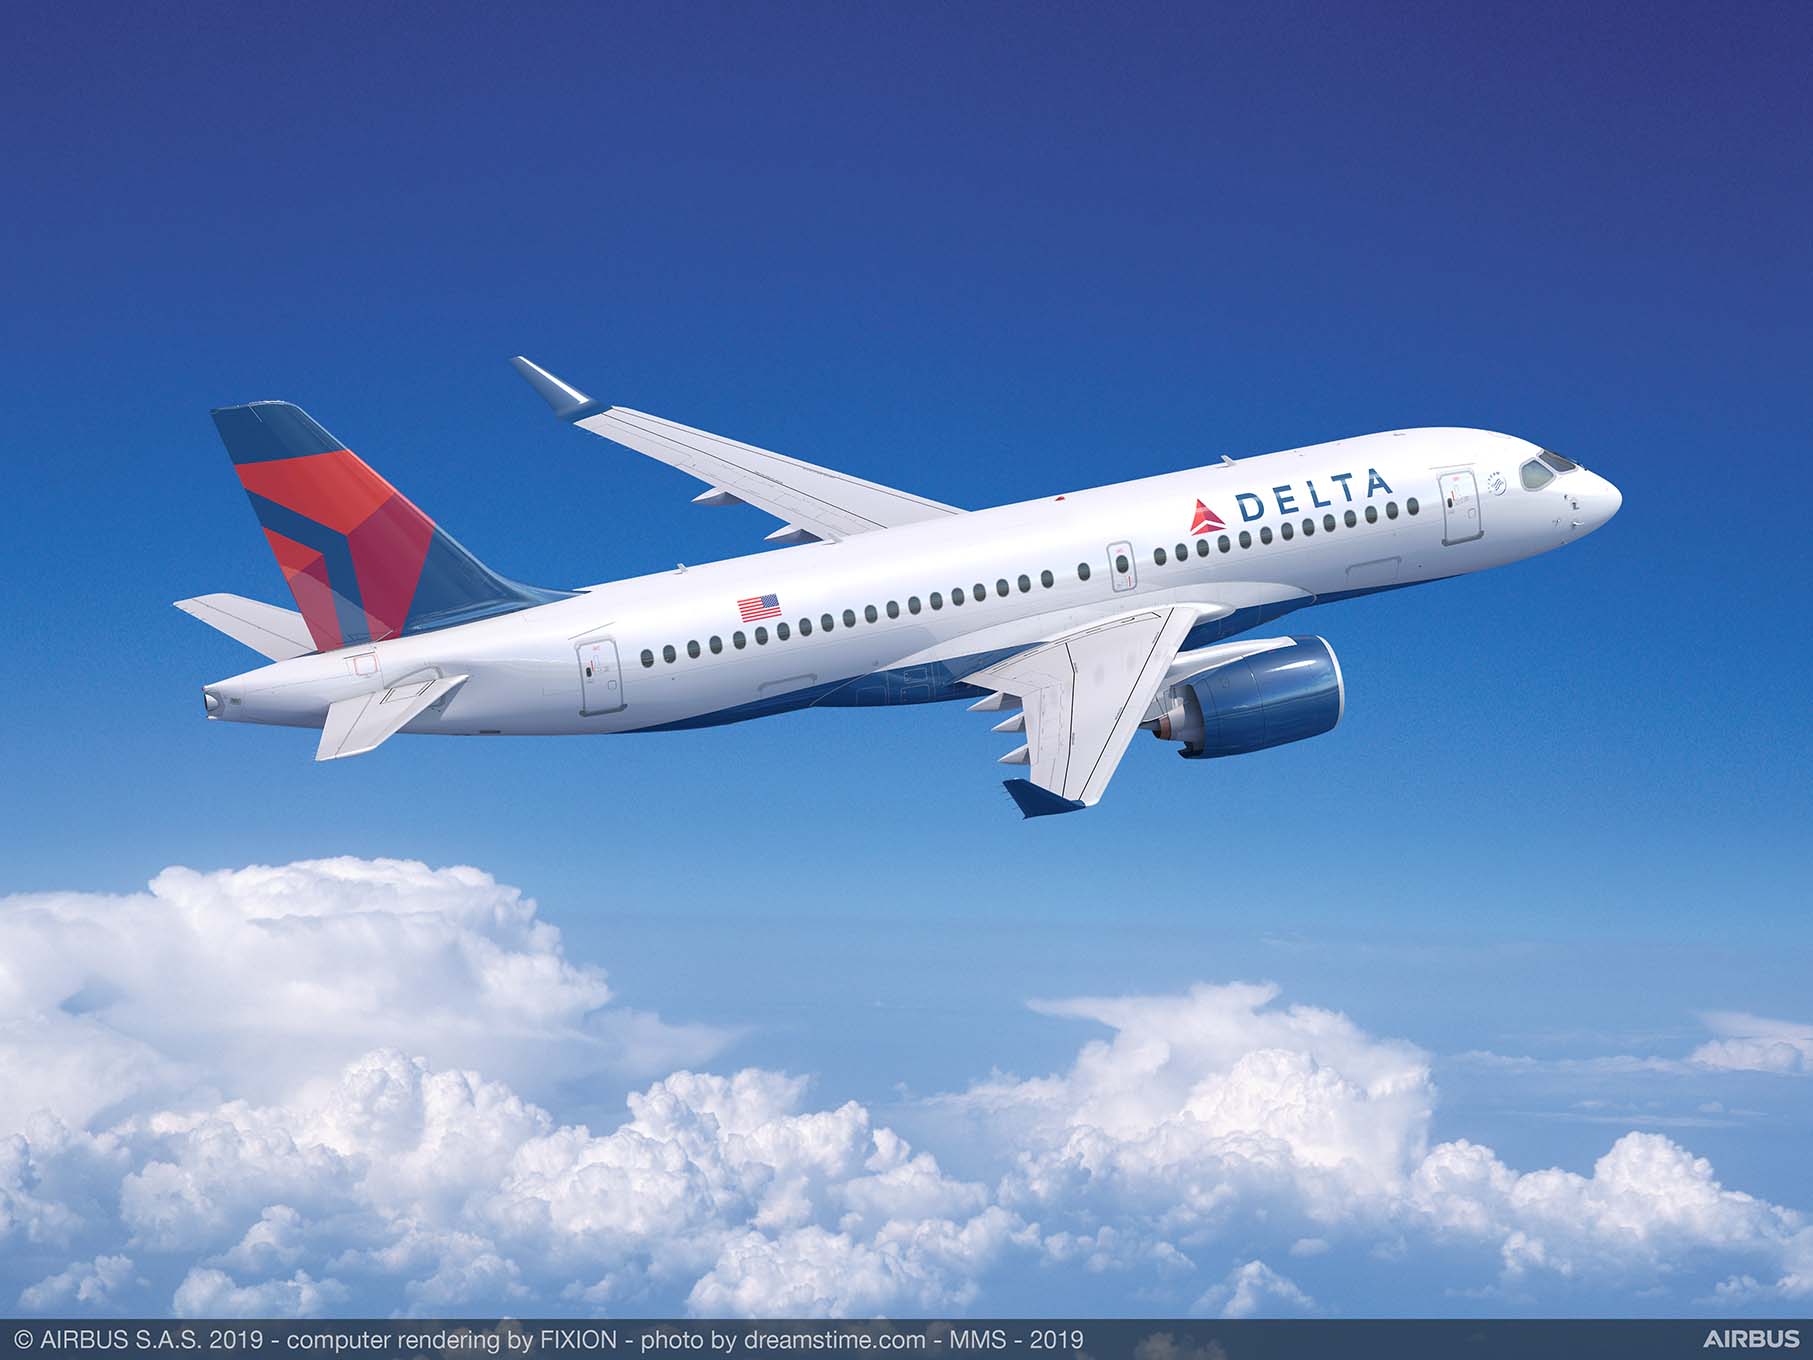 Delta Air Lines delivers $1.5bn operating profit for Q3 2022